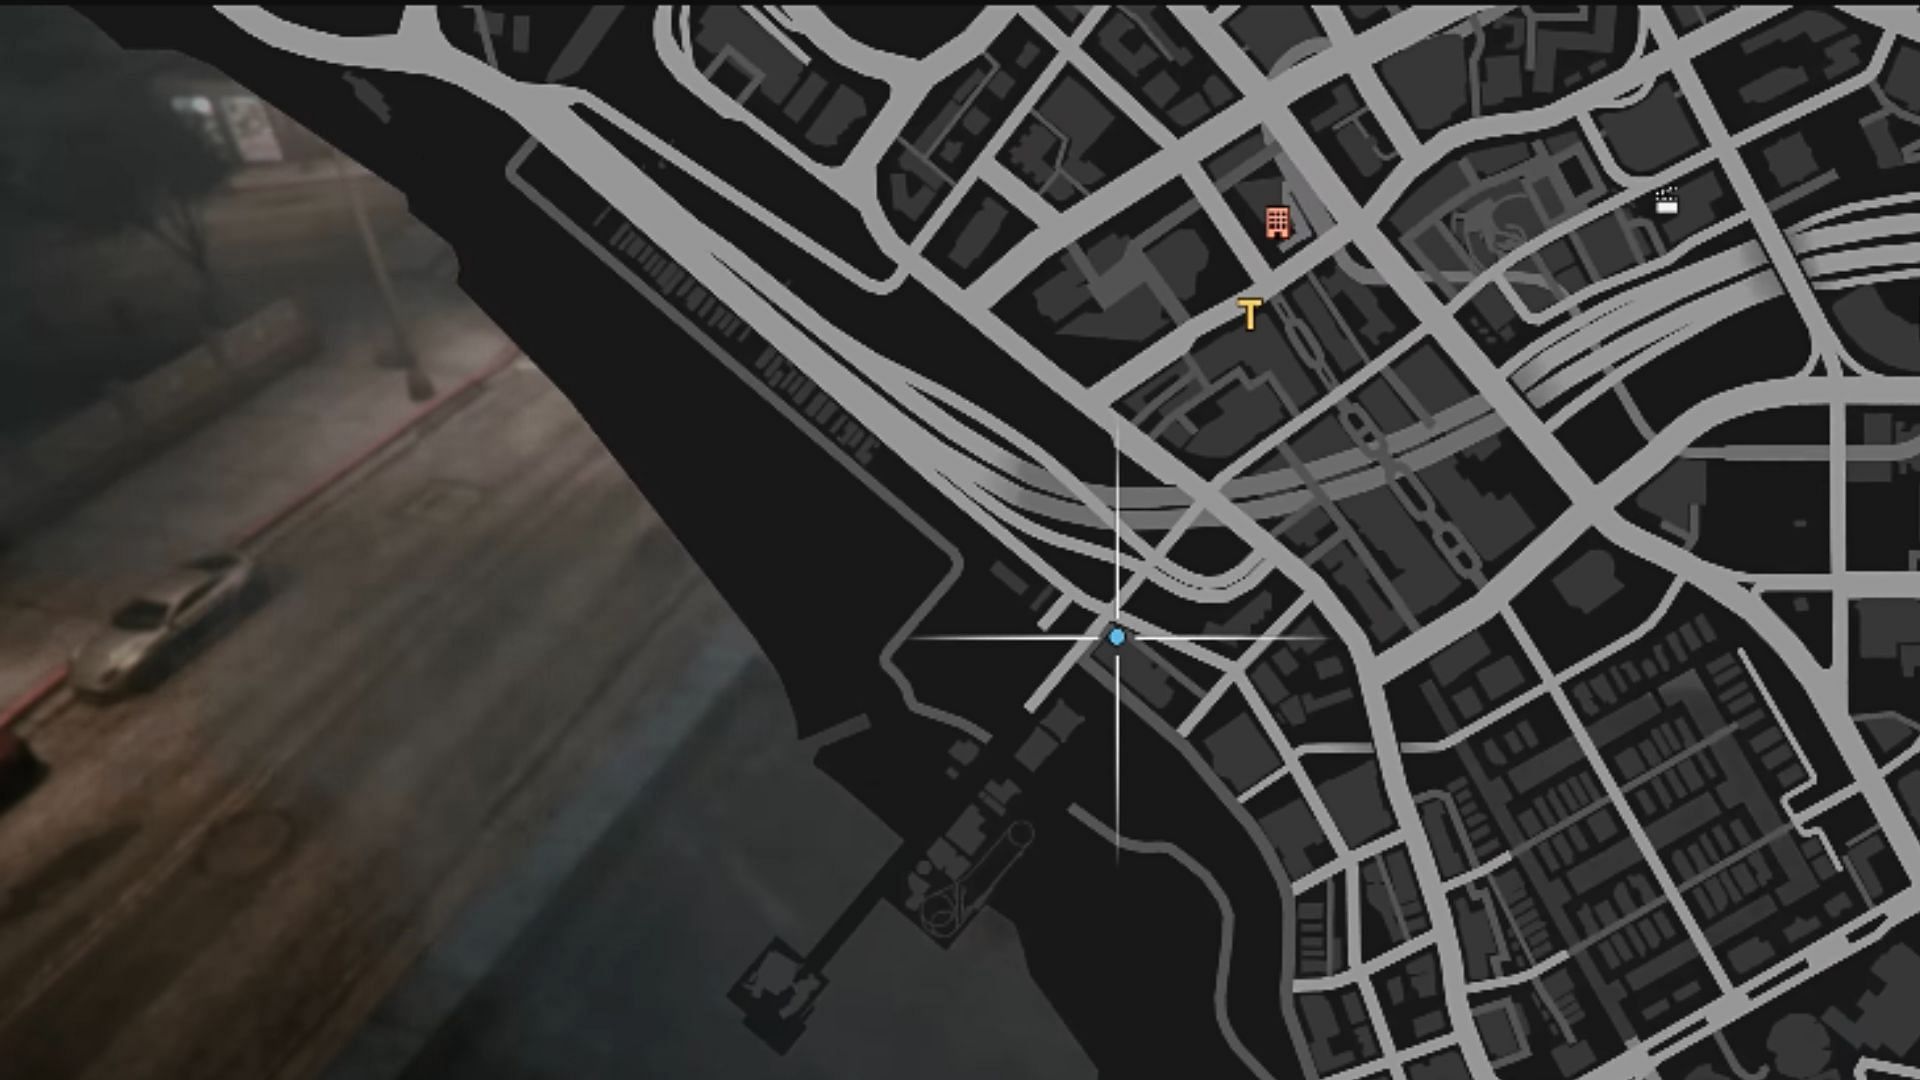 Service Carbine locations 5/10 (Image via YouTube/ GTA Series Videos)